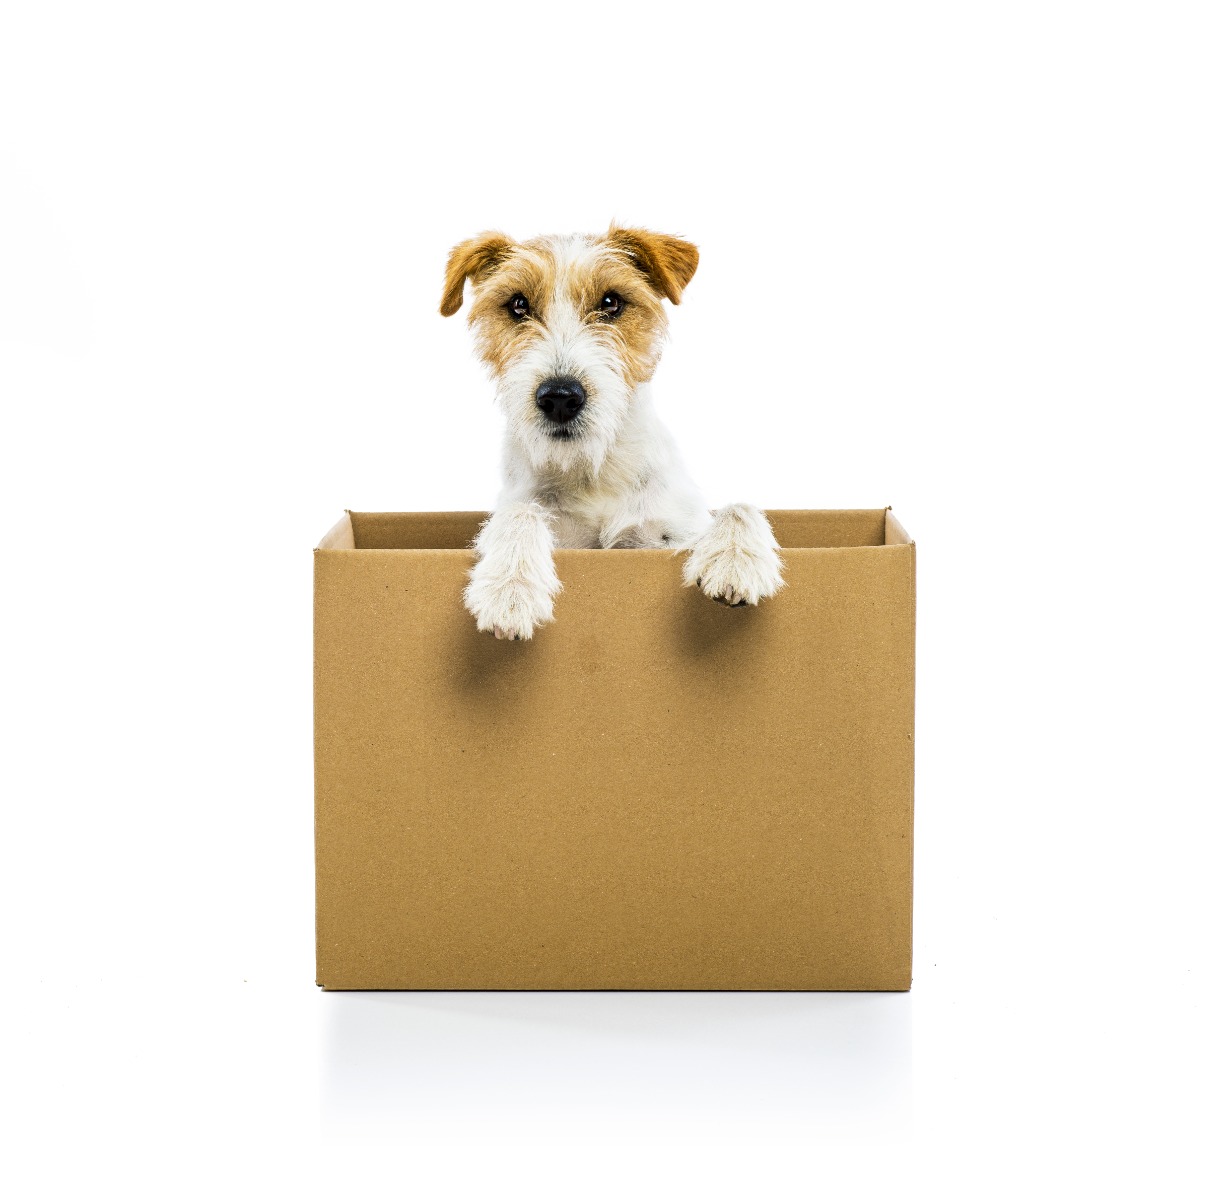 dog inside box